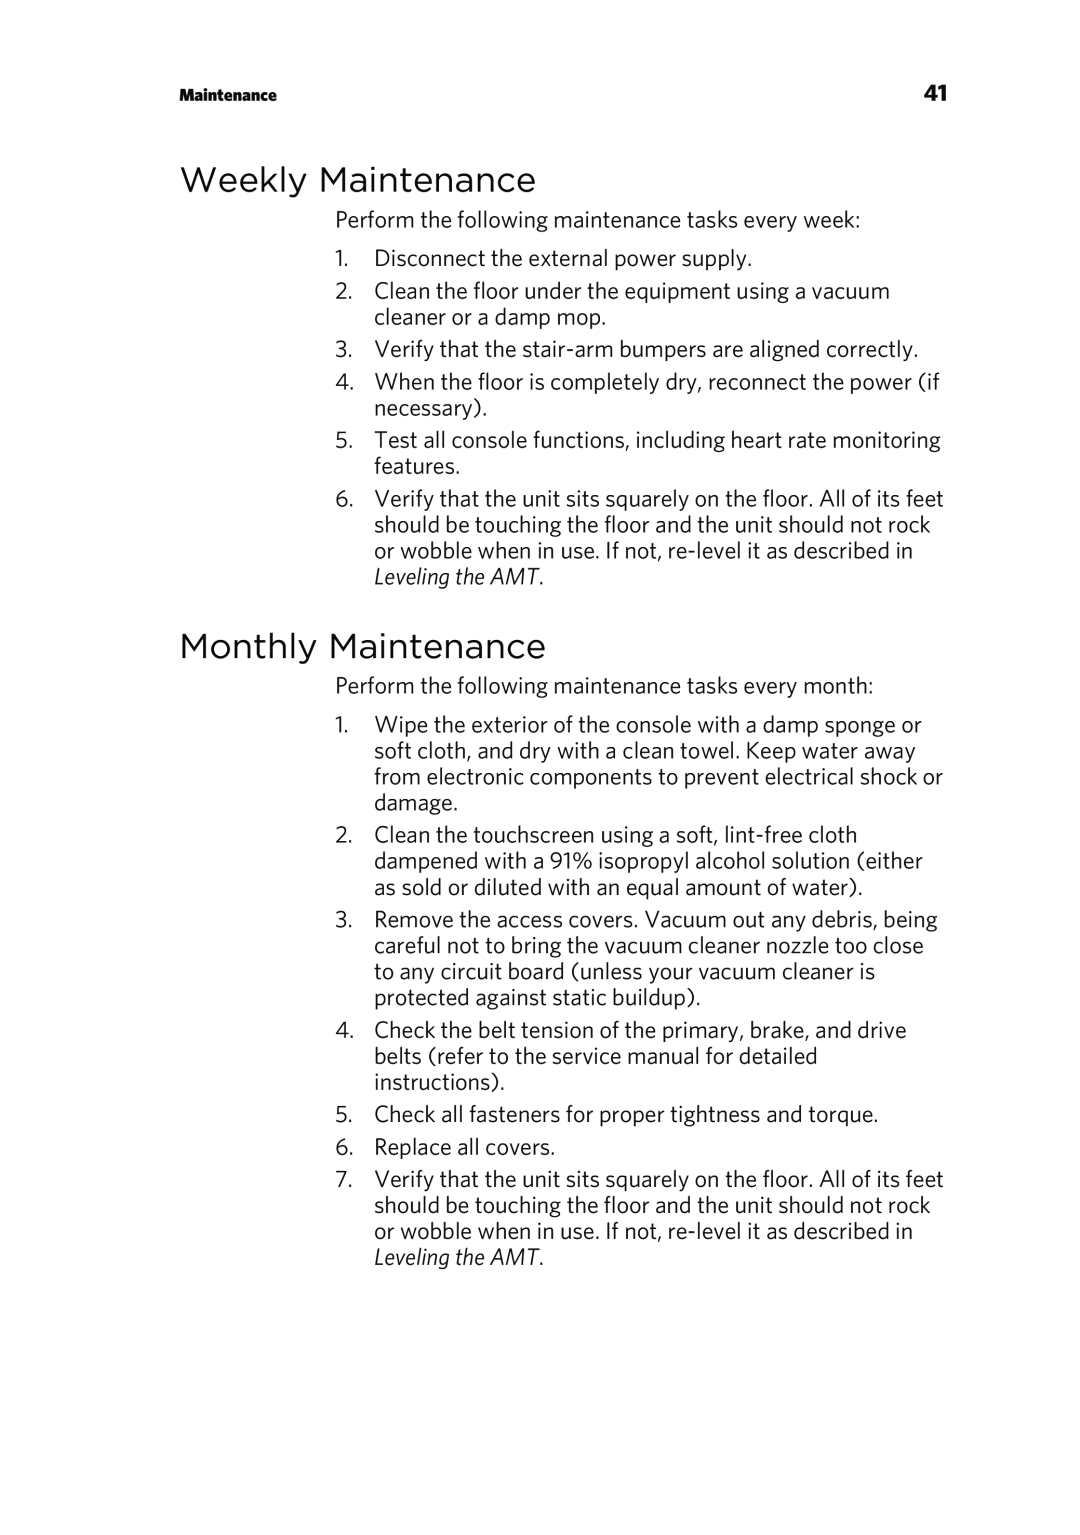 Precor P80 manual Weekly Maintenance, Monthly Maintenance 